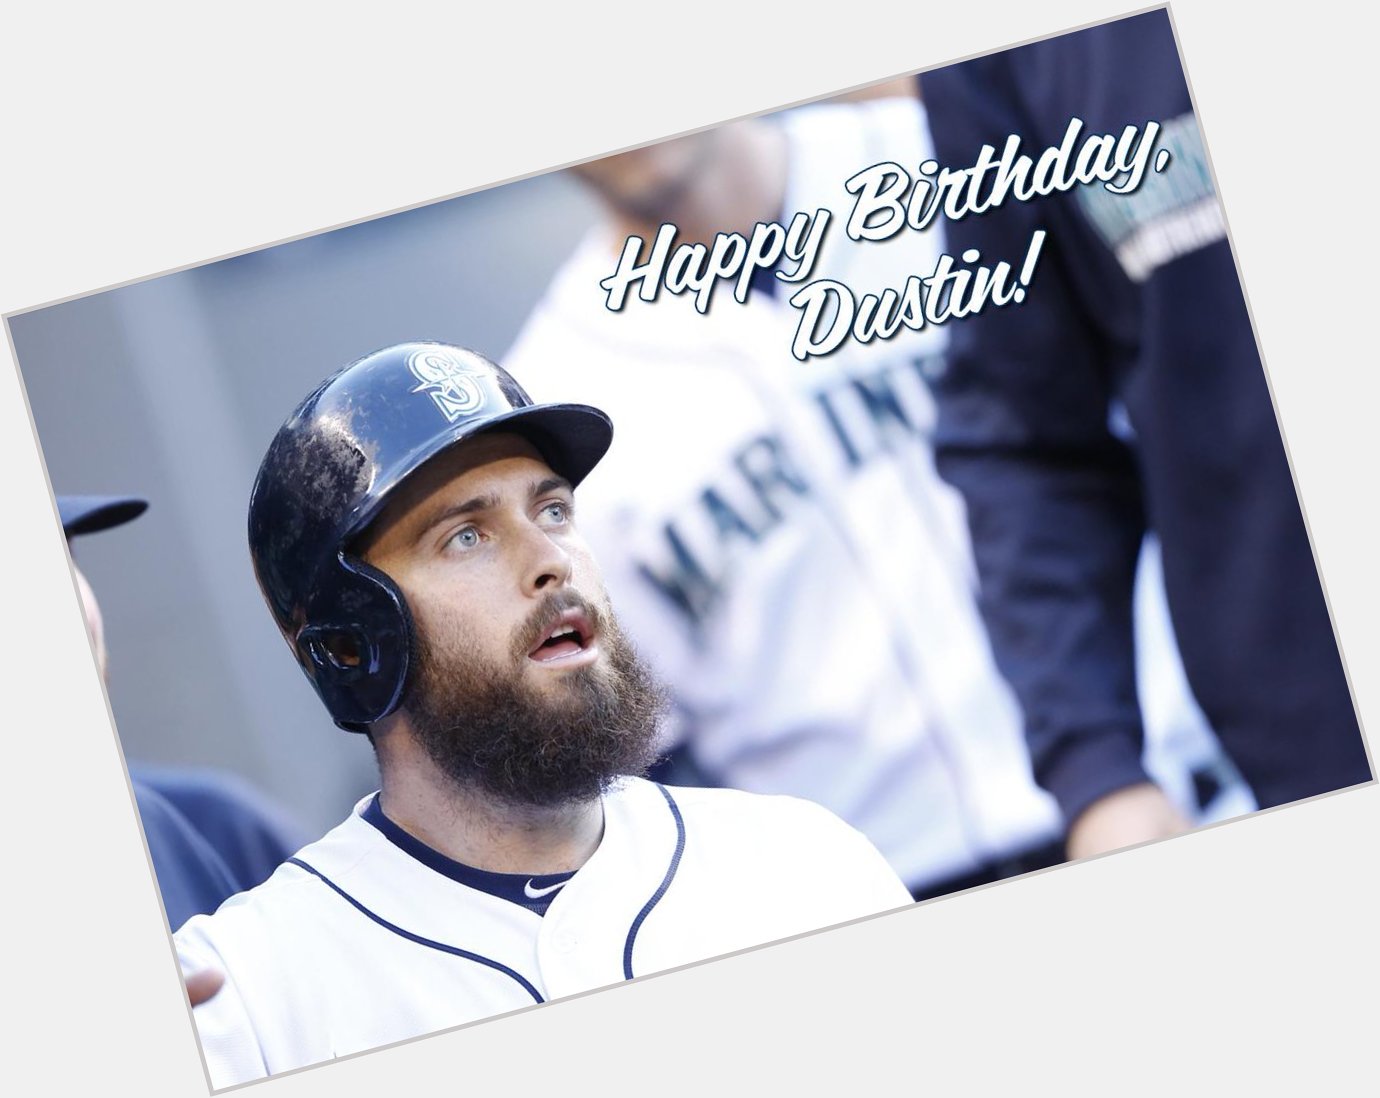 Happy Birthday to the bearded wonder, Dustin Ackley. 